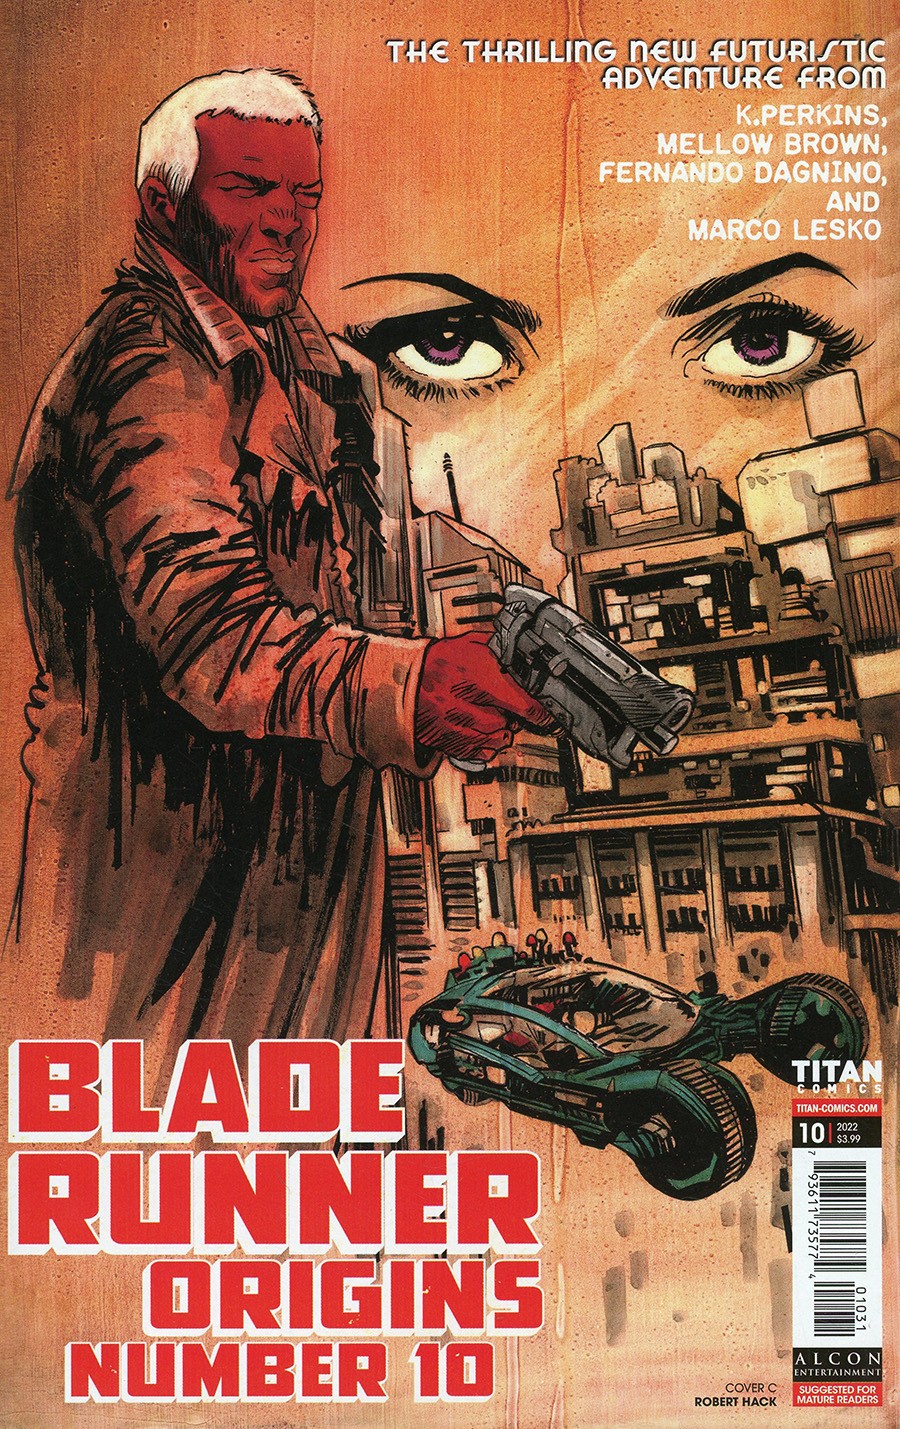 Blade Runner Origins #10 Cover C Variant Robert Hack Cover